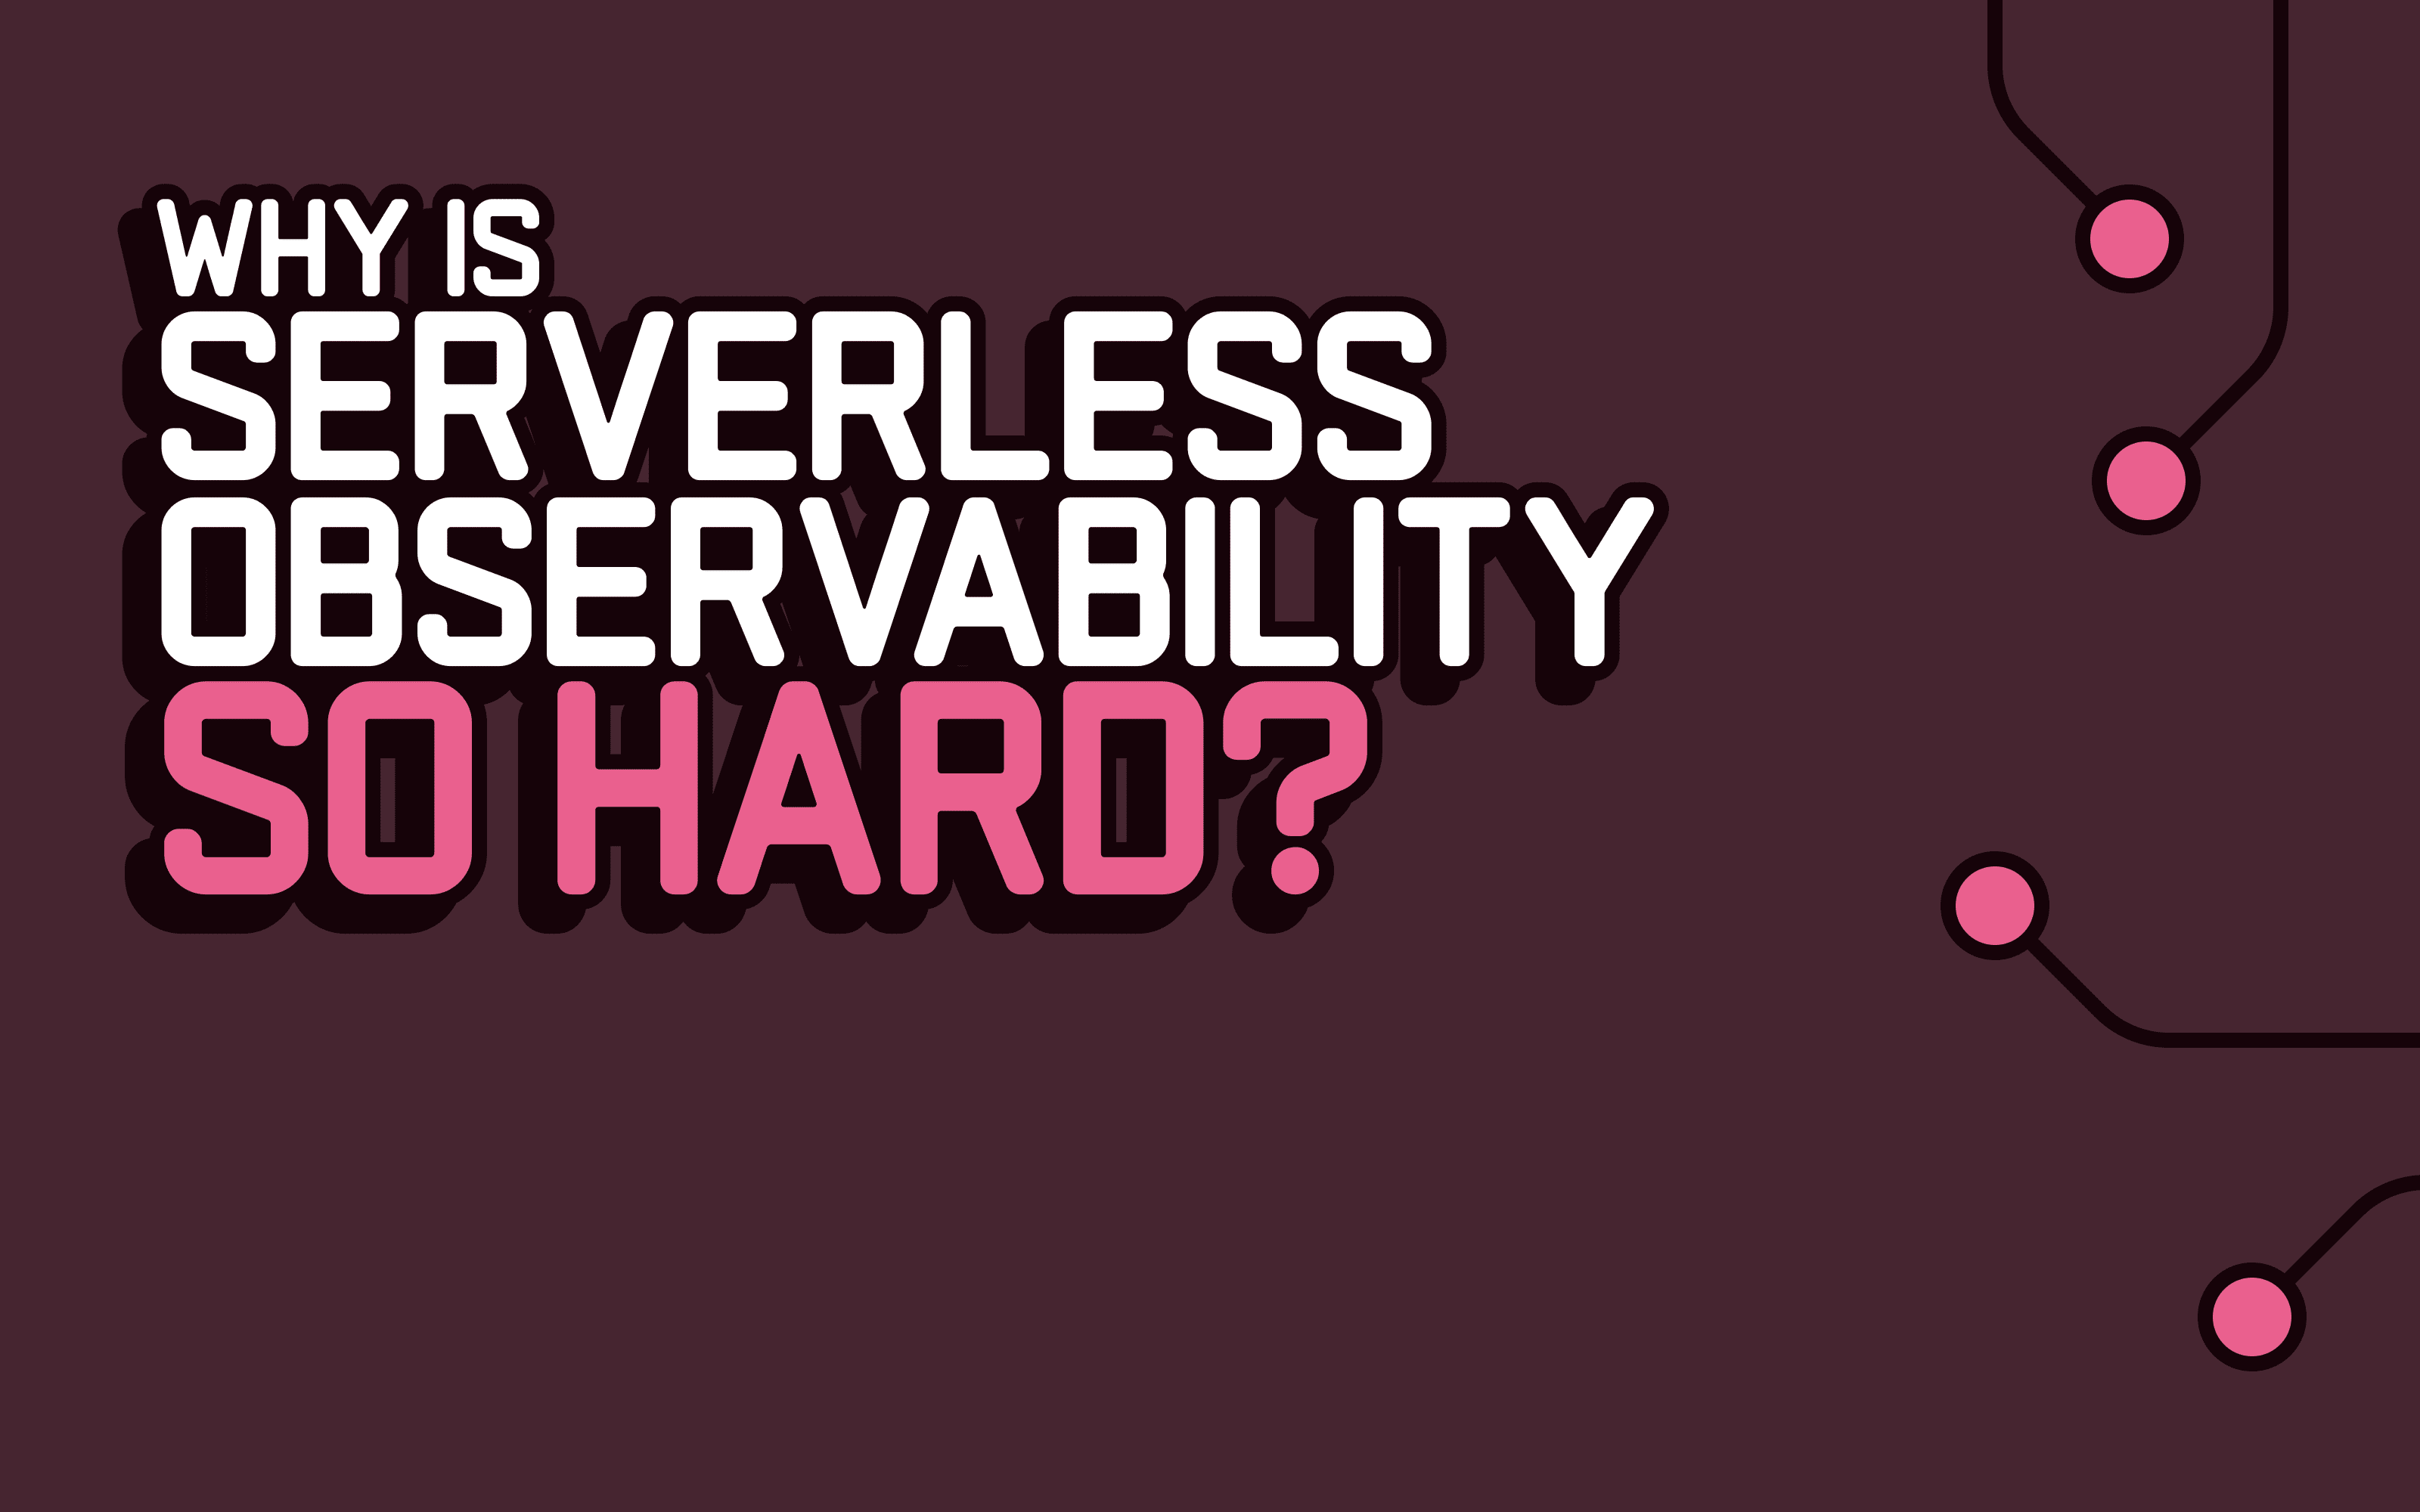 Why is serverless observability so hard?